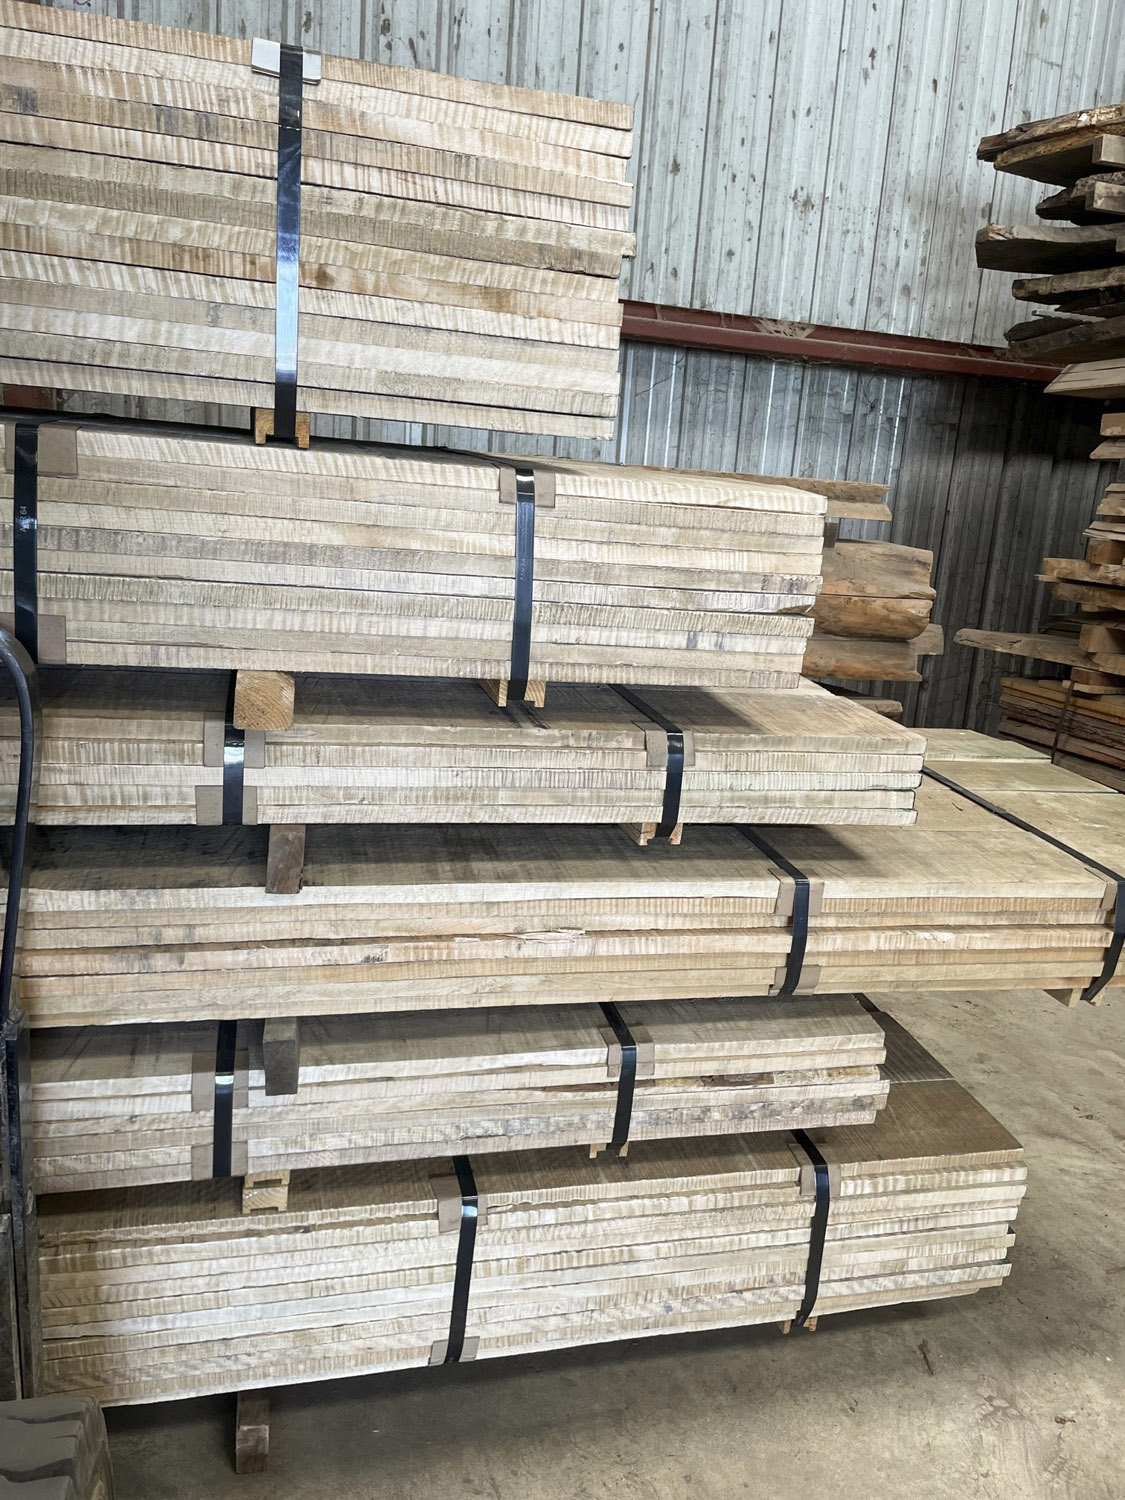 Buy Tiger Maple lumber at Hearne Hardwoods Inc.